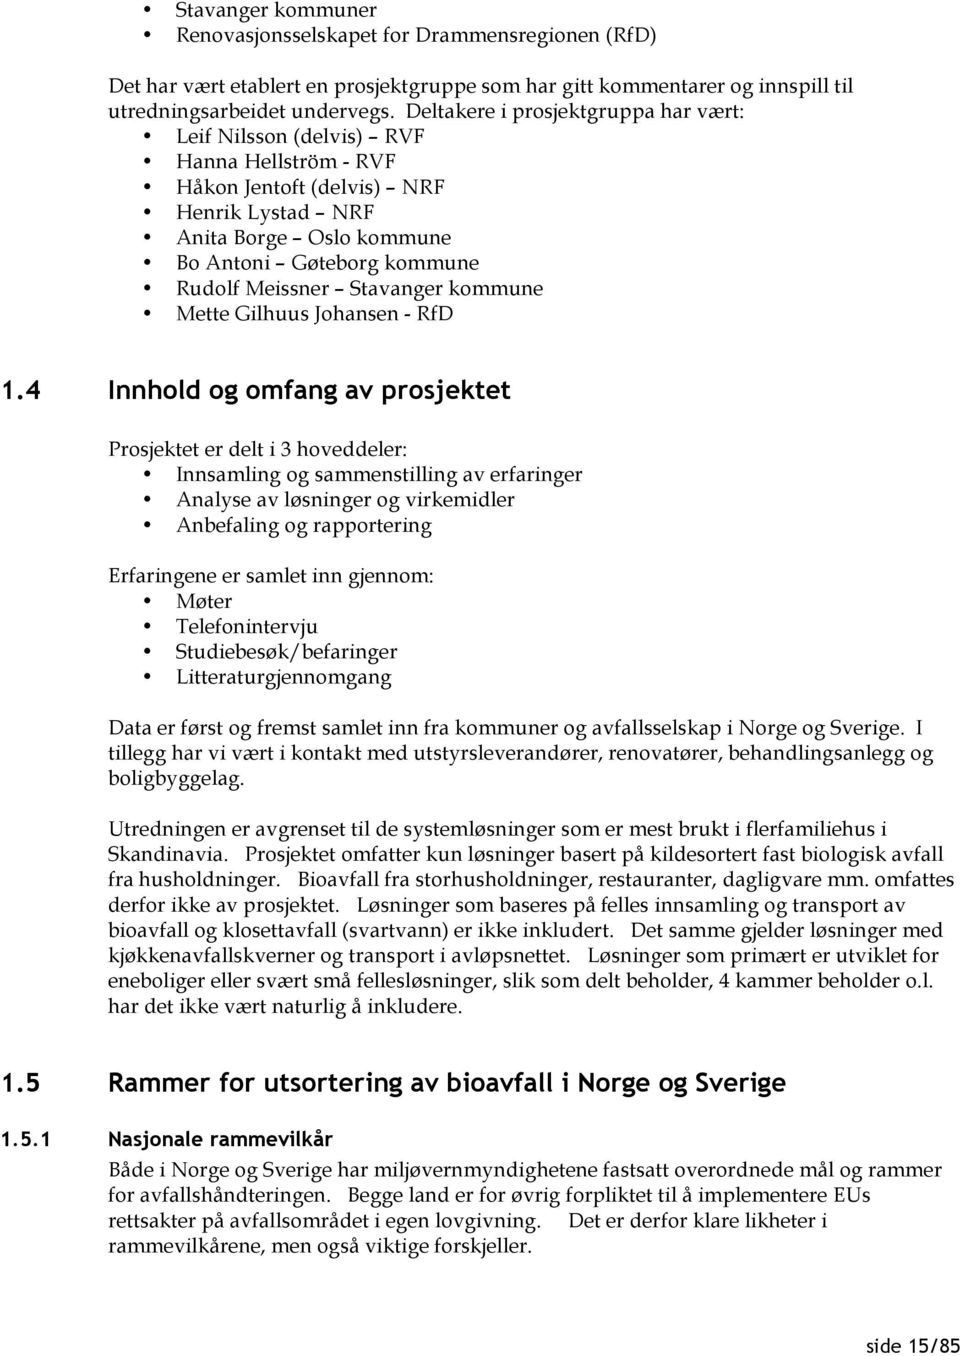 Stavanger kommune Mette Gilhuus Johansen - RfD 1.